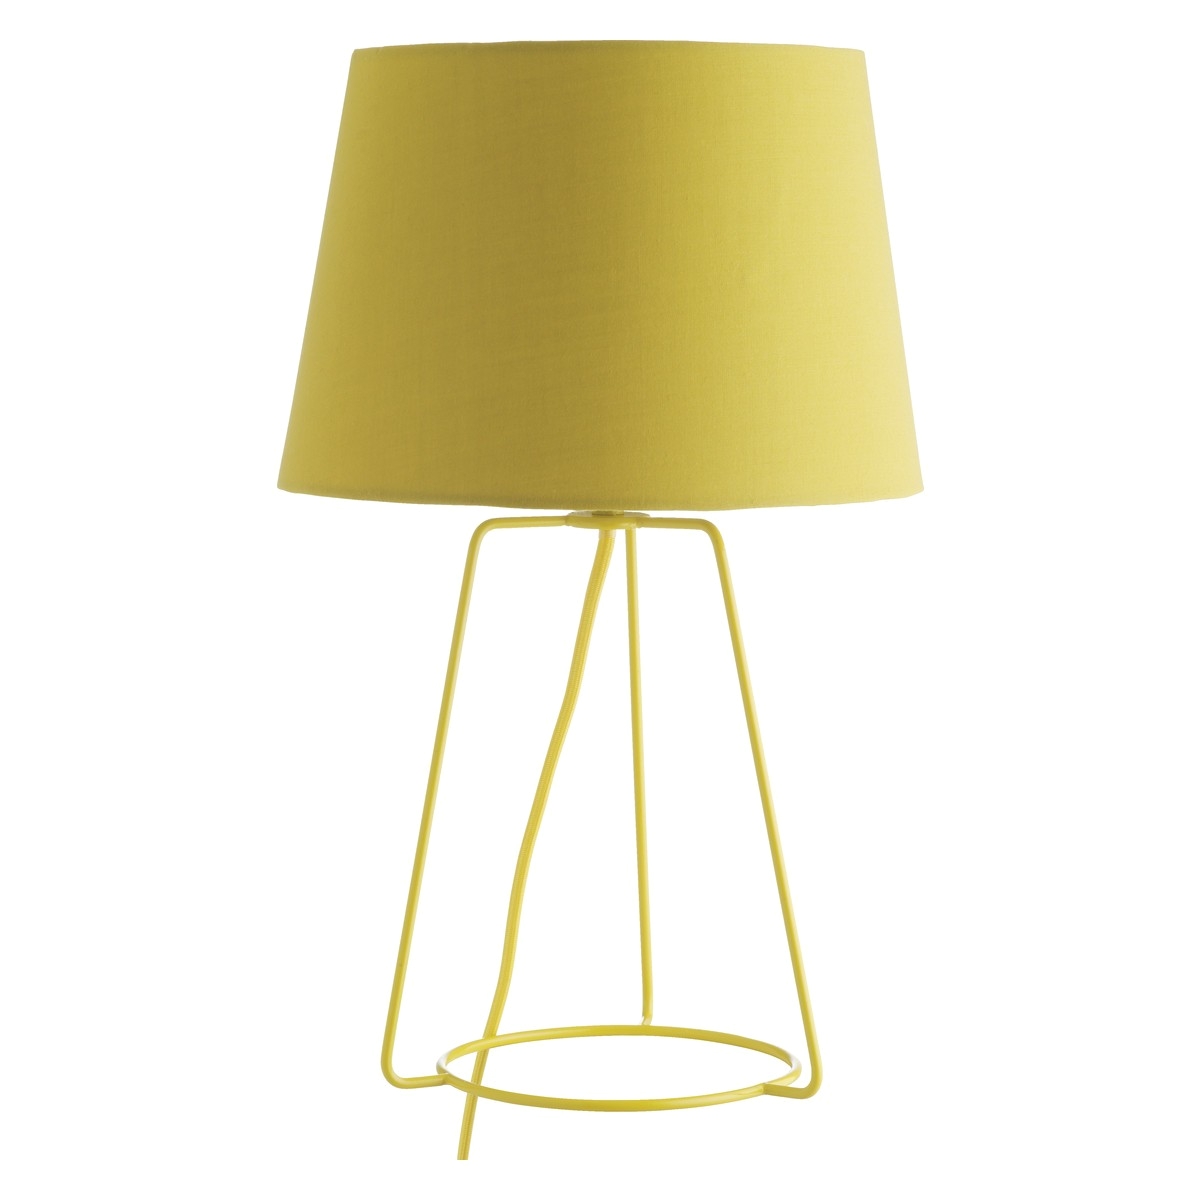 yellow metal table lamp fabric shade powder coated skinny base